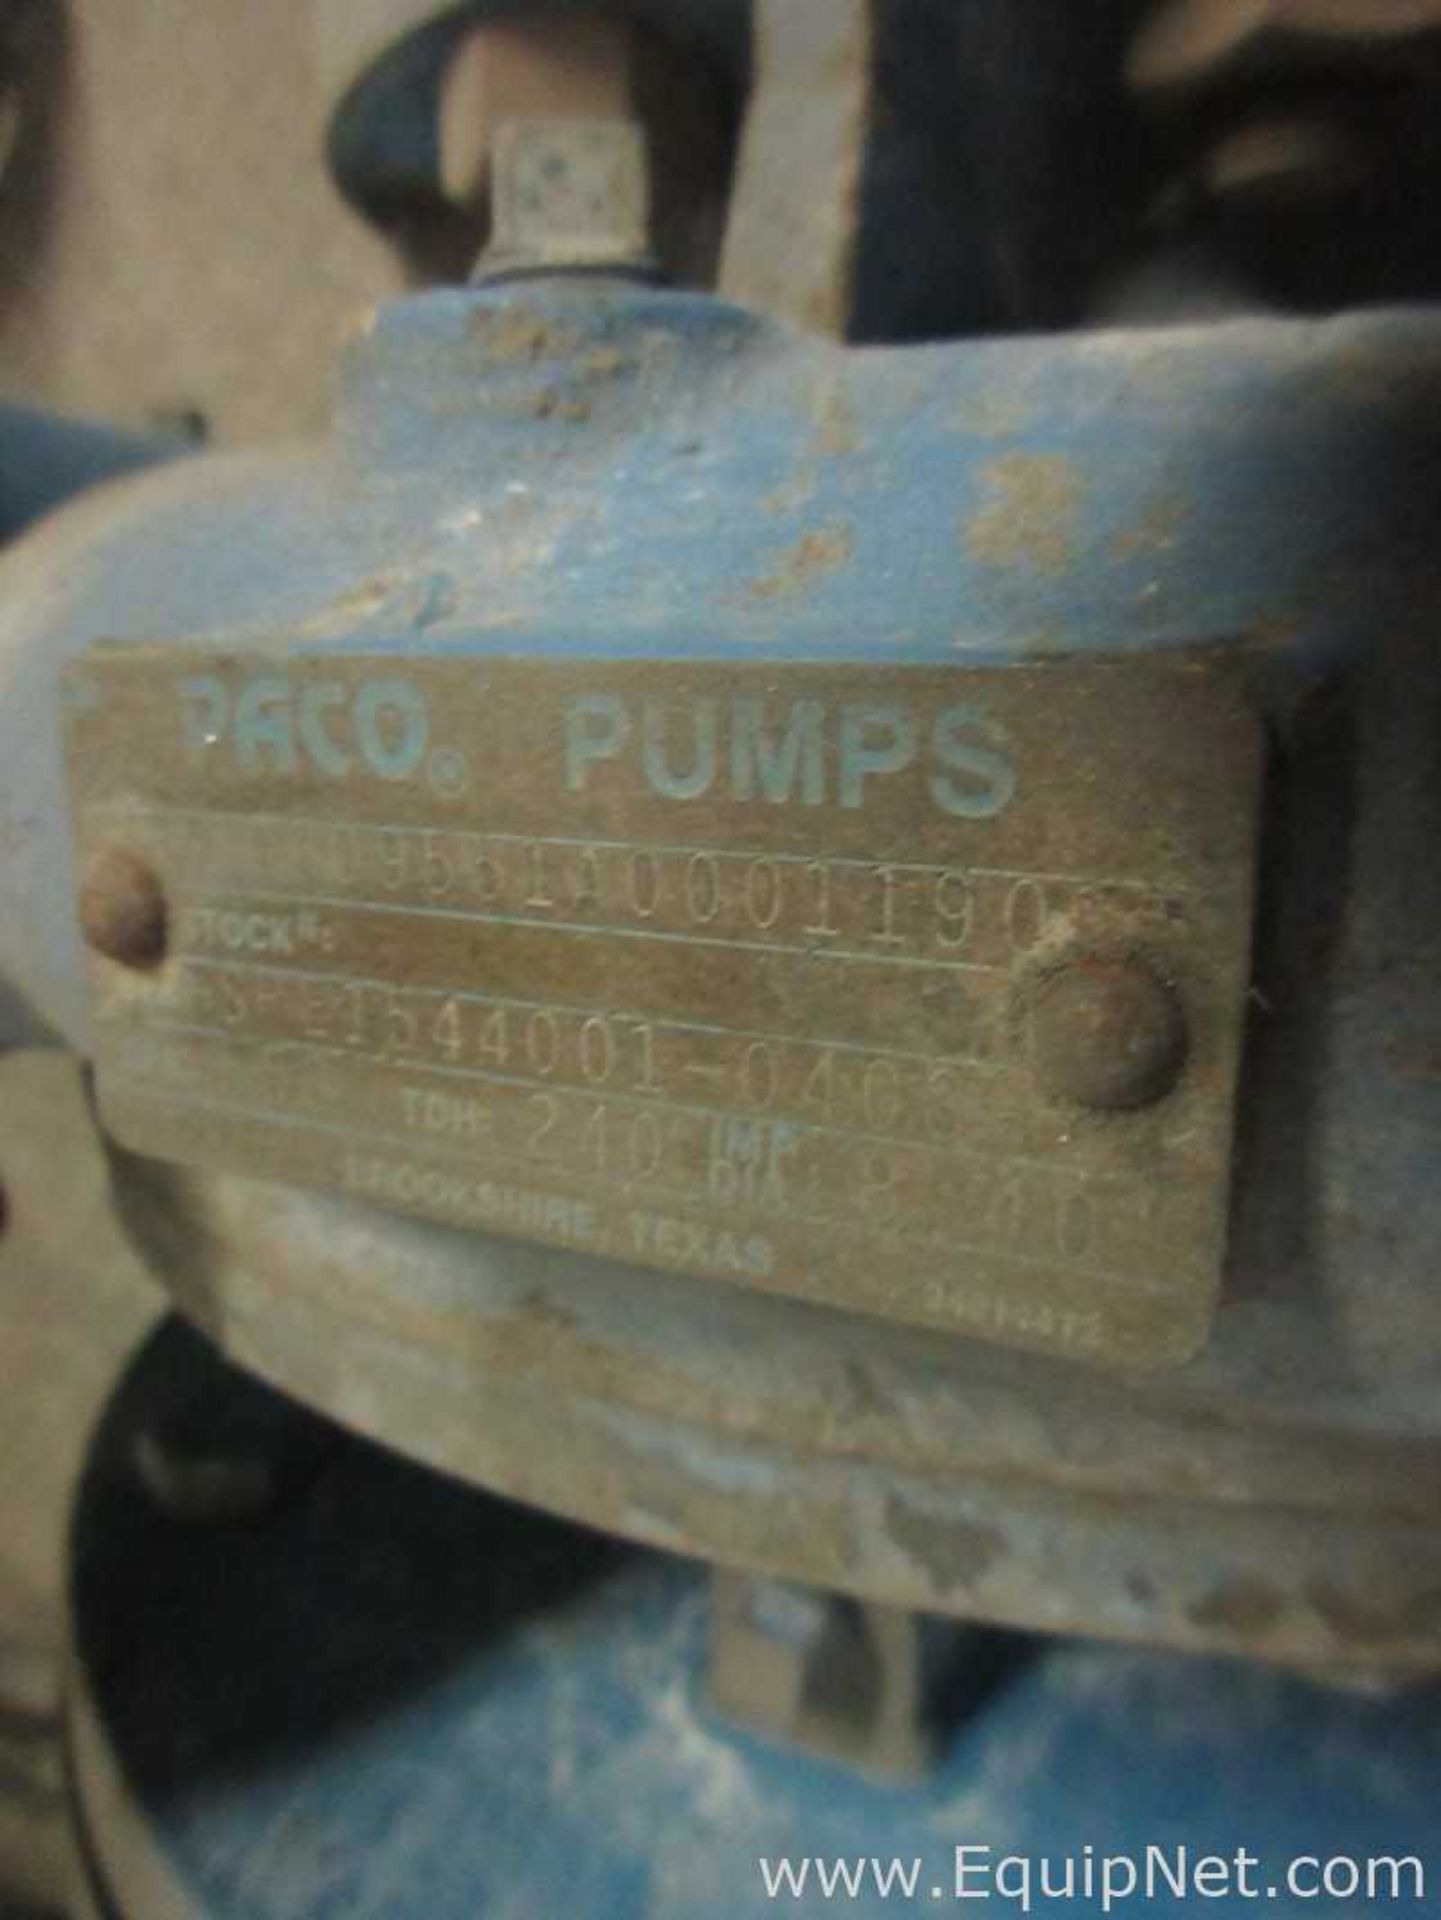 Paco Pumps Inc. 10309551A0001190 Centrifugal Pump Skid - Image 10 of 27